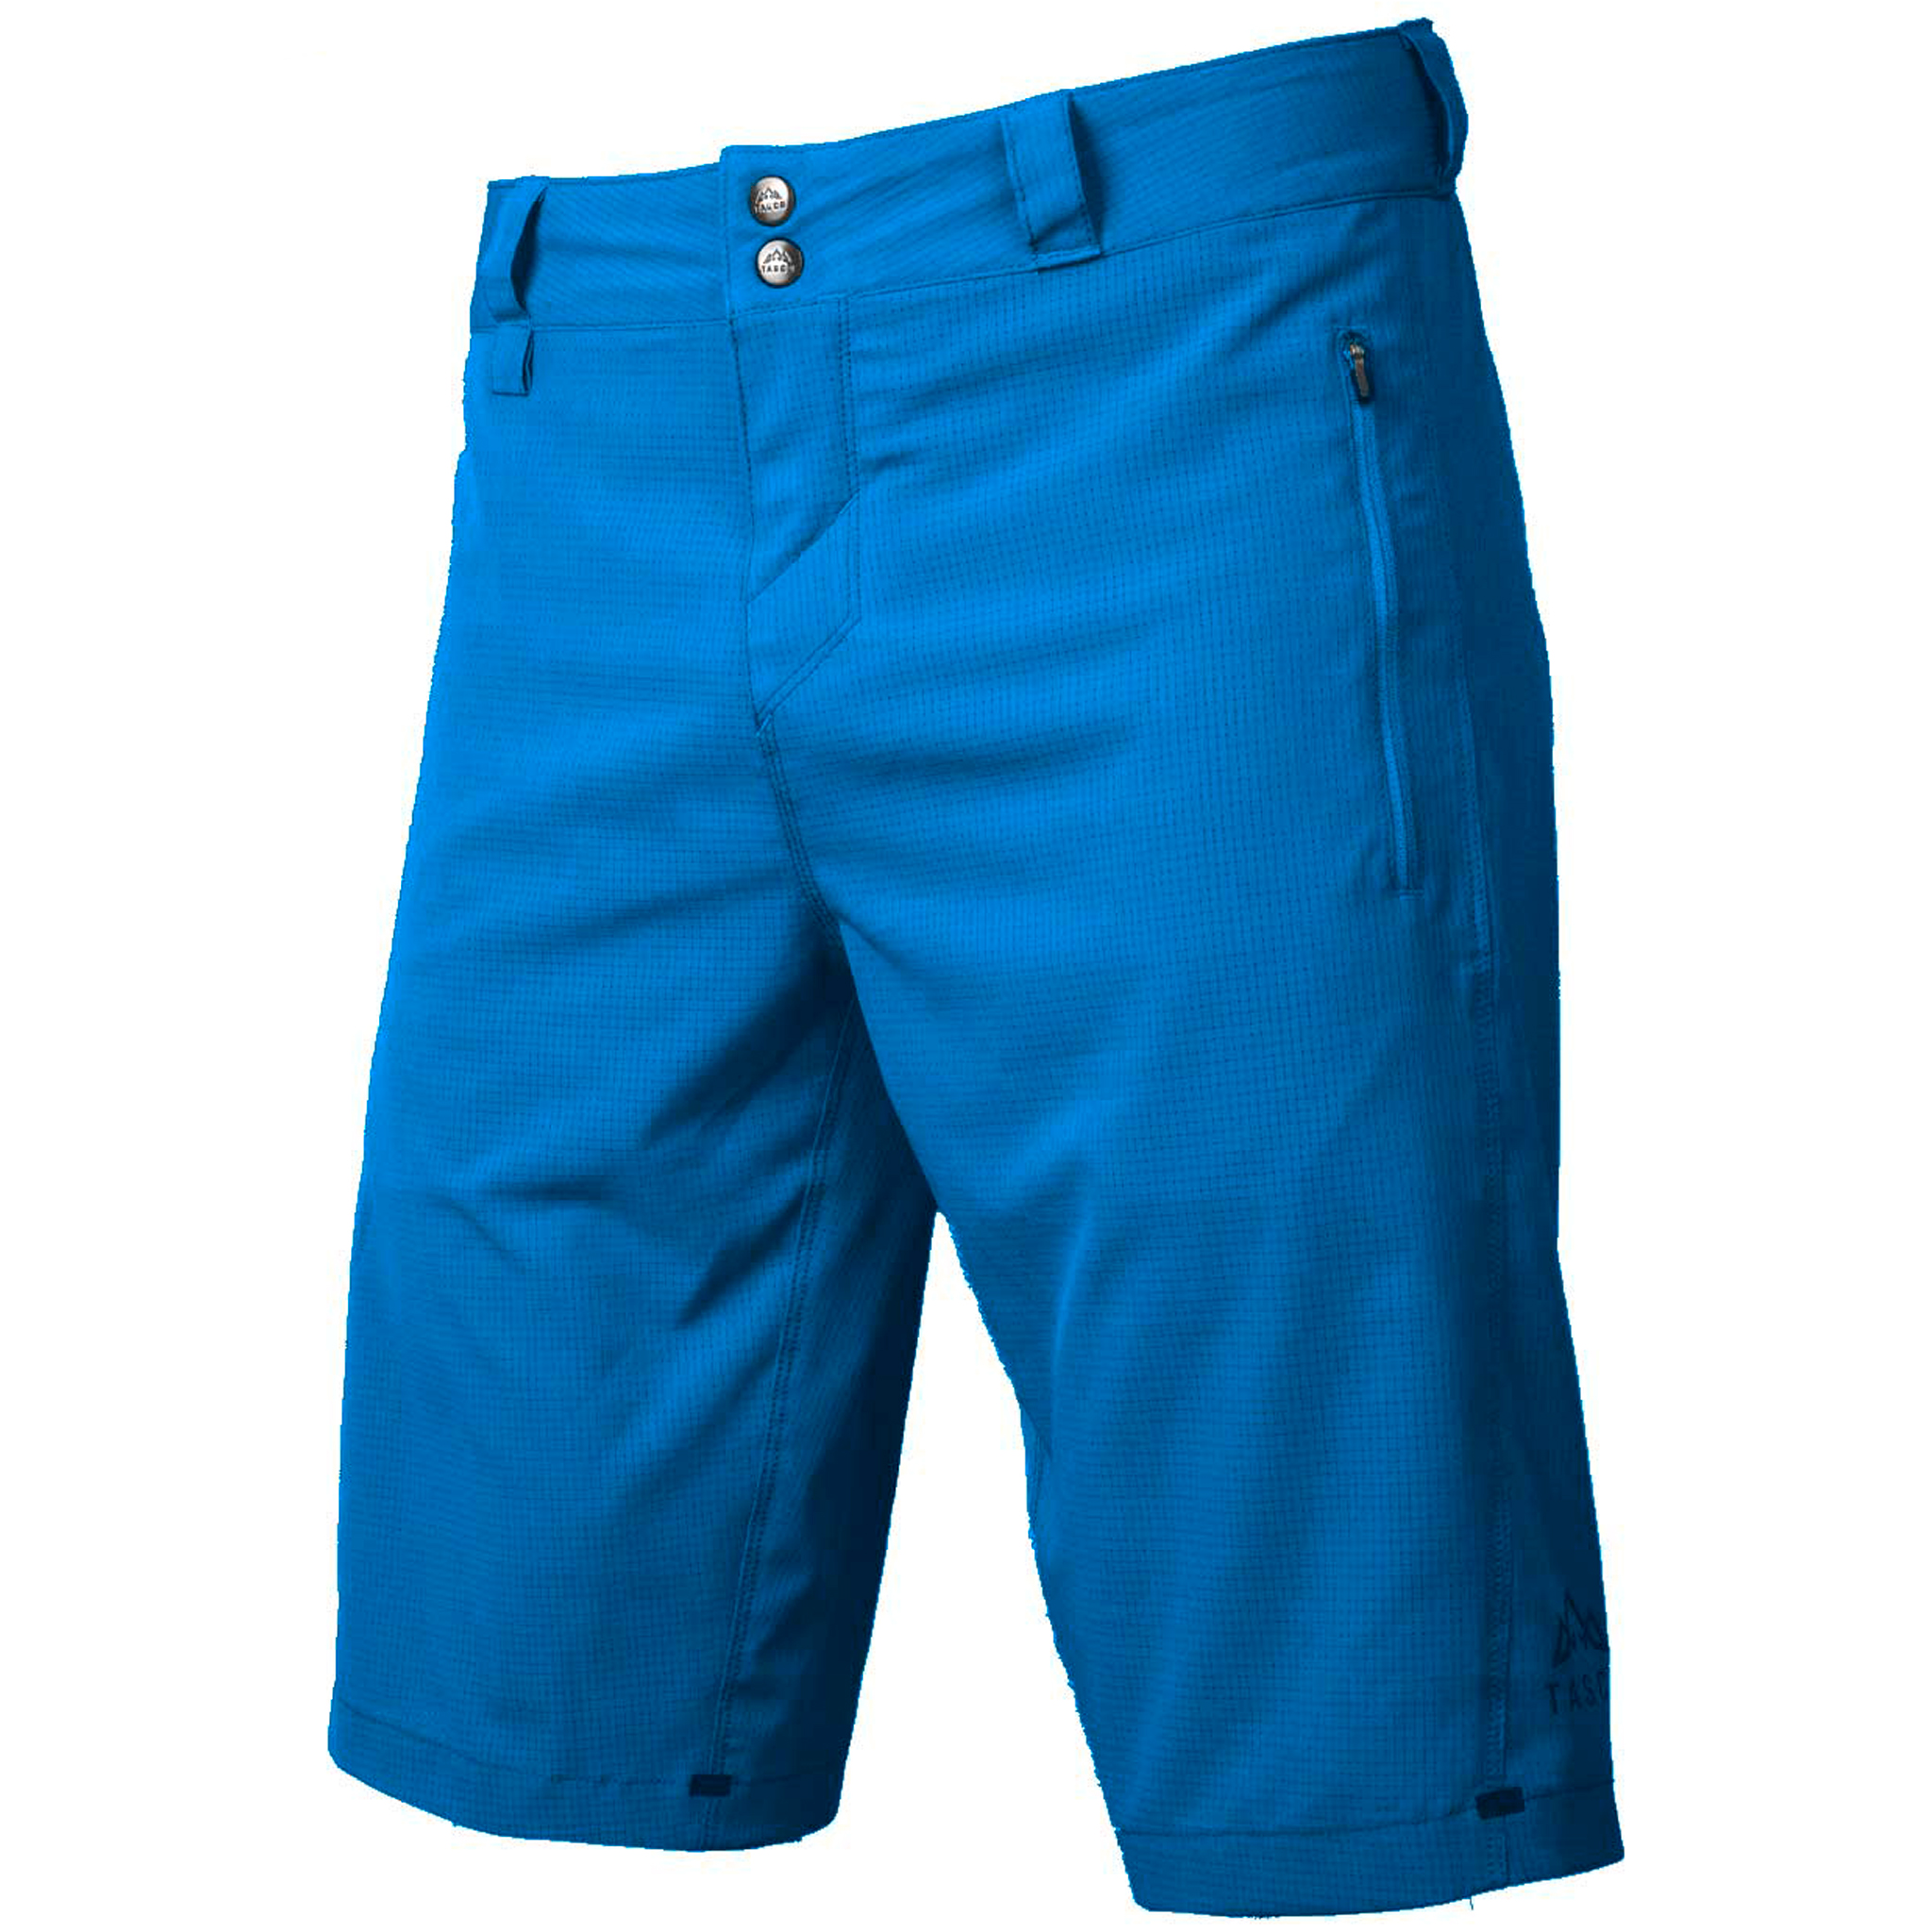 Tasco Fantom MTB Shorts, S (30"), Kryptonite